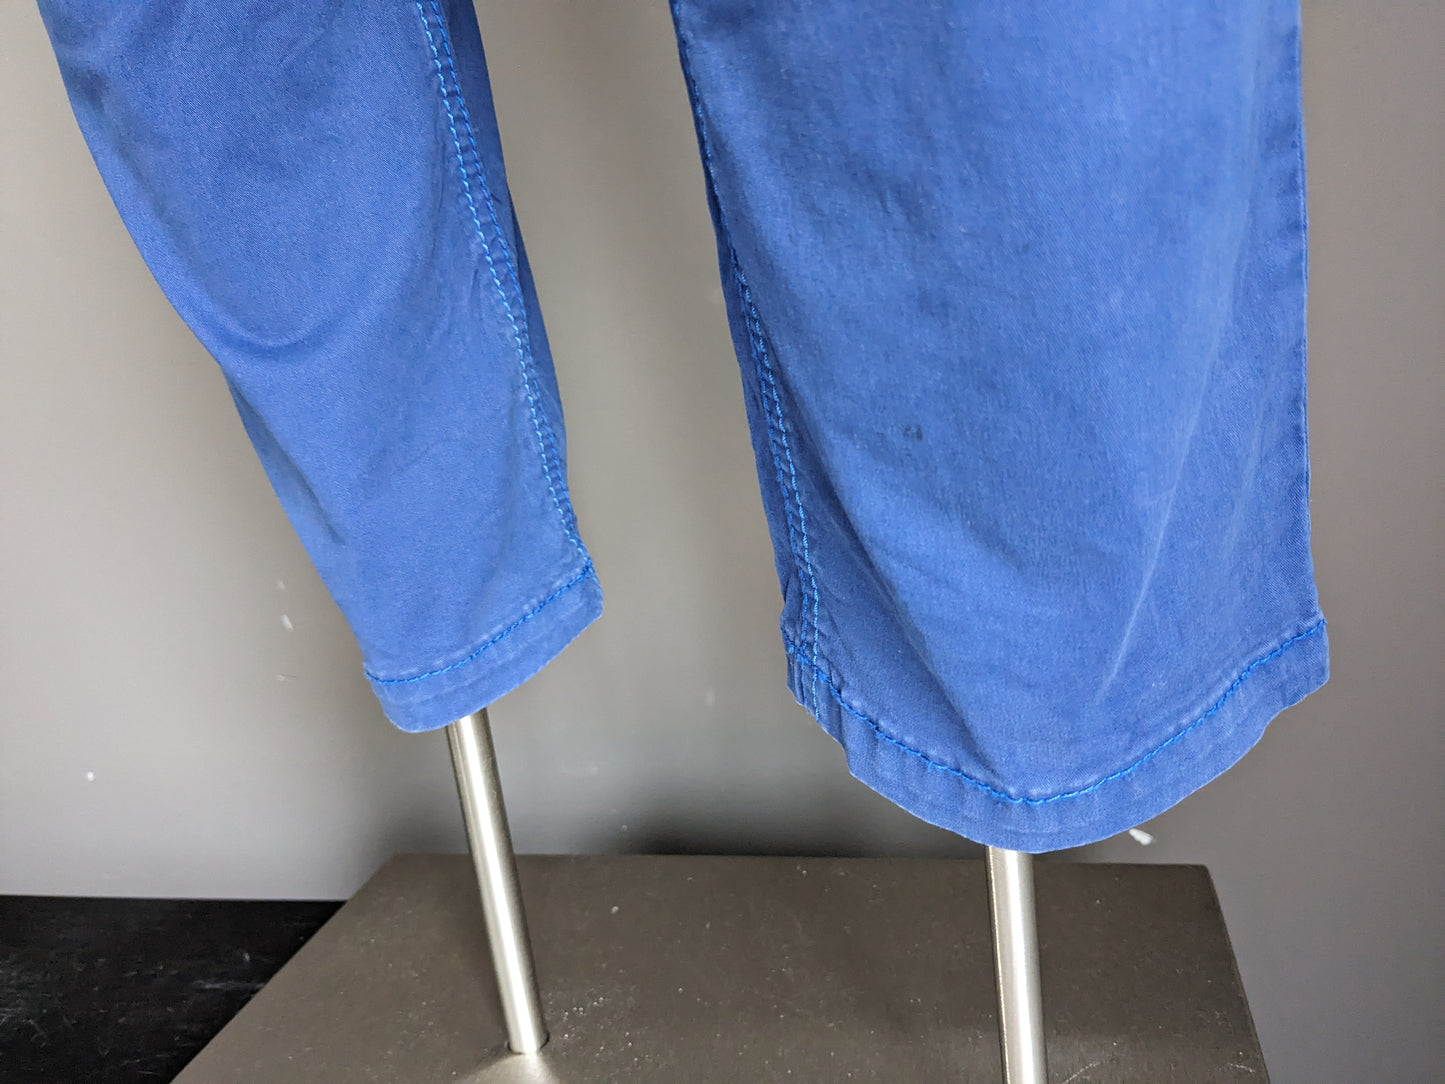 Pantalones / pantalones de Bartlett. Azul. Tamaño 24 (48) / m